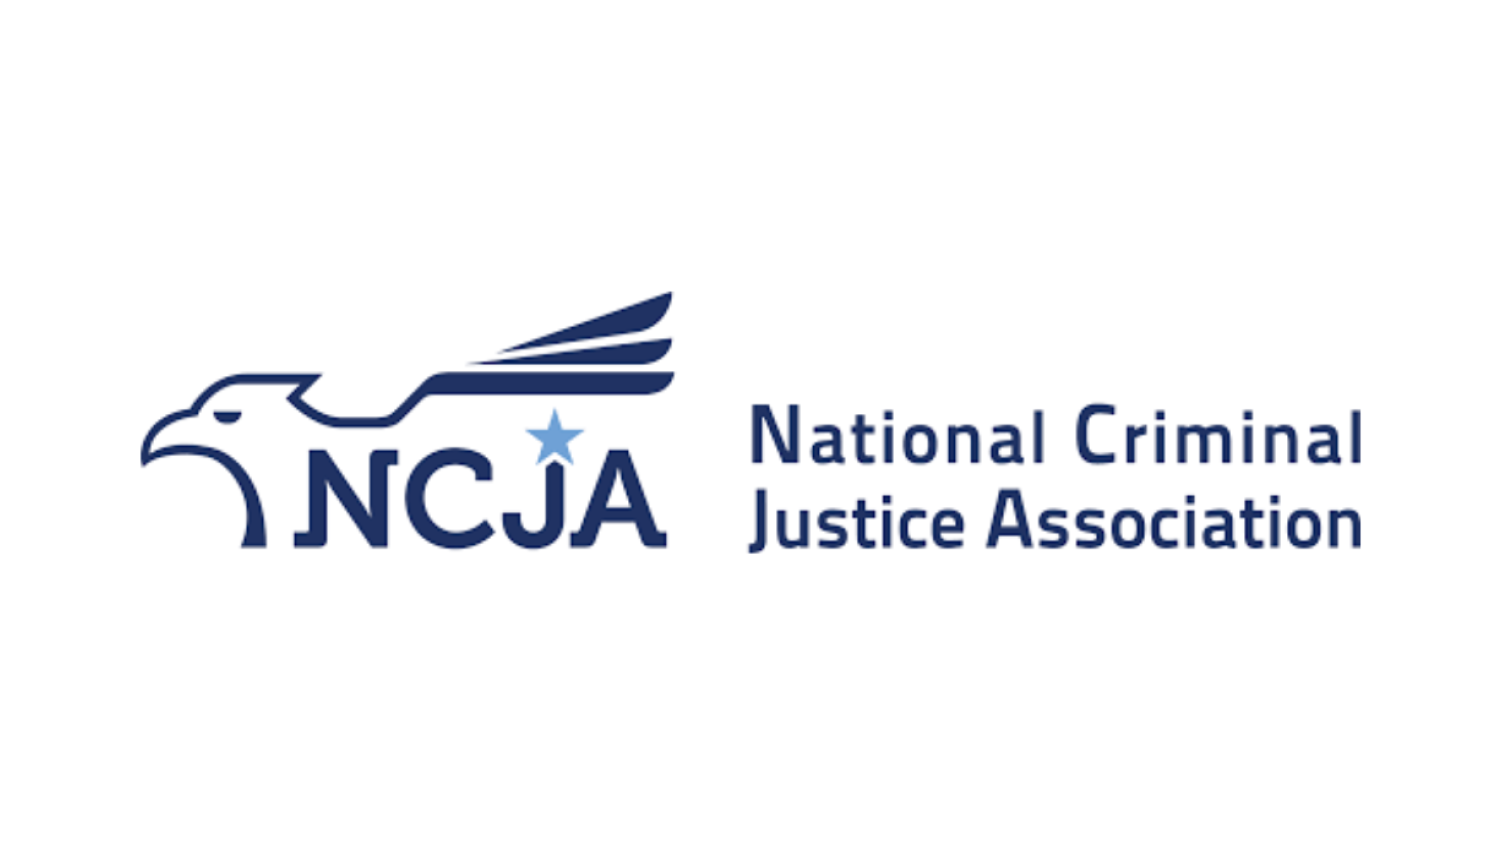 National Criminal Justice Association (NCJA) logo